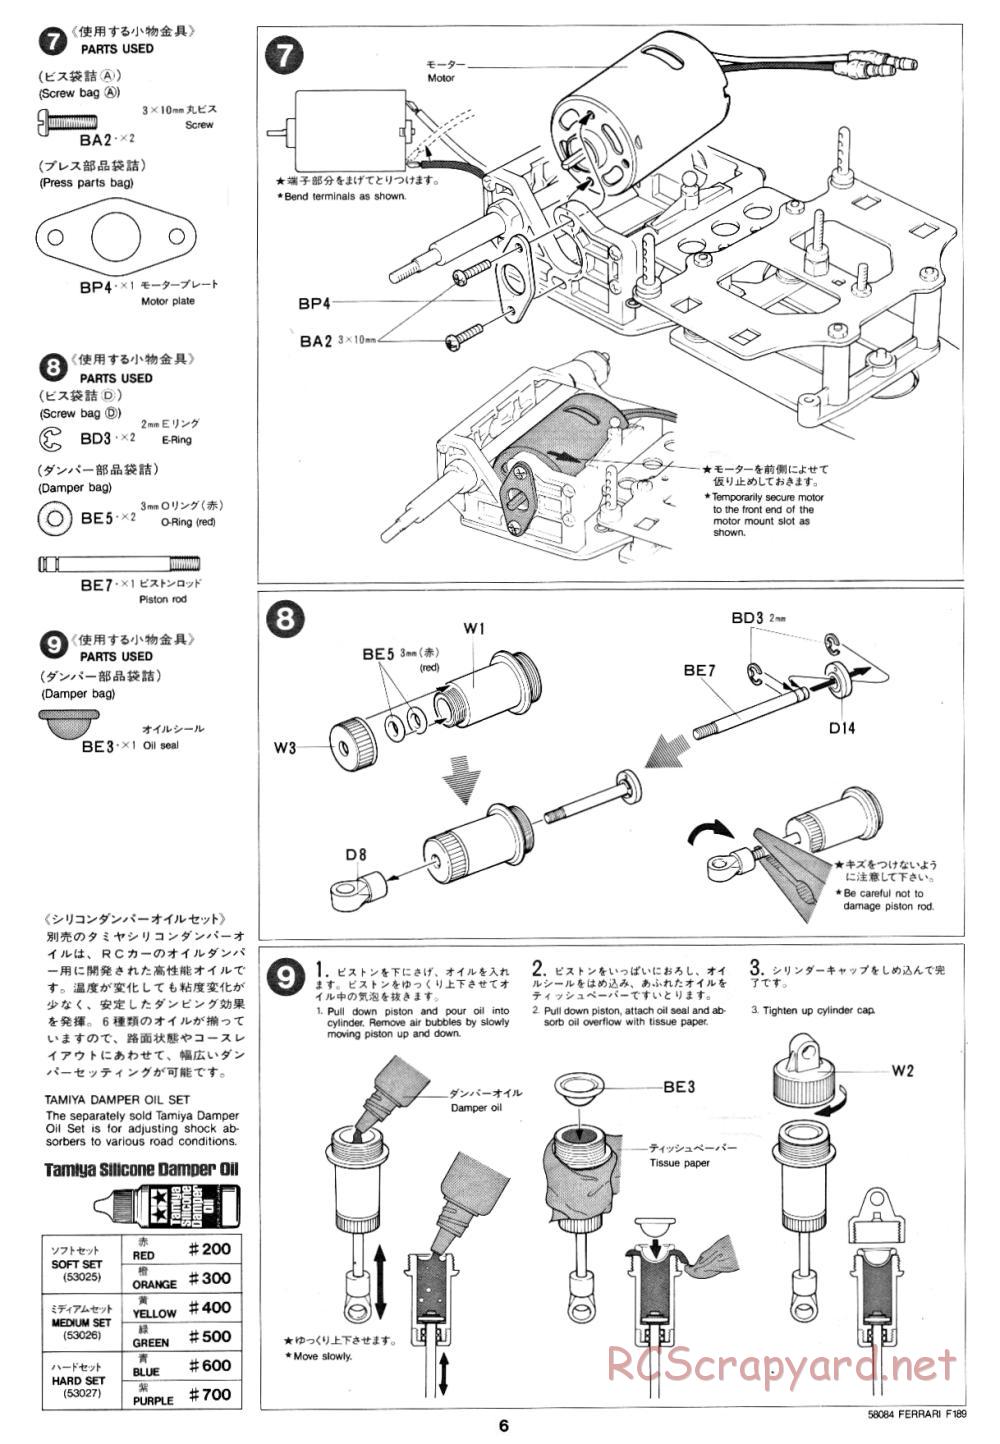 Tamiya - Ferrari F189 Late Version - 58084 - Manual - Page 6